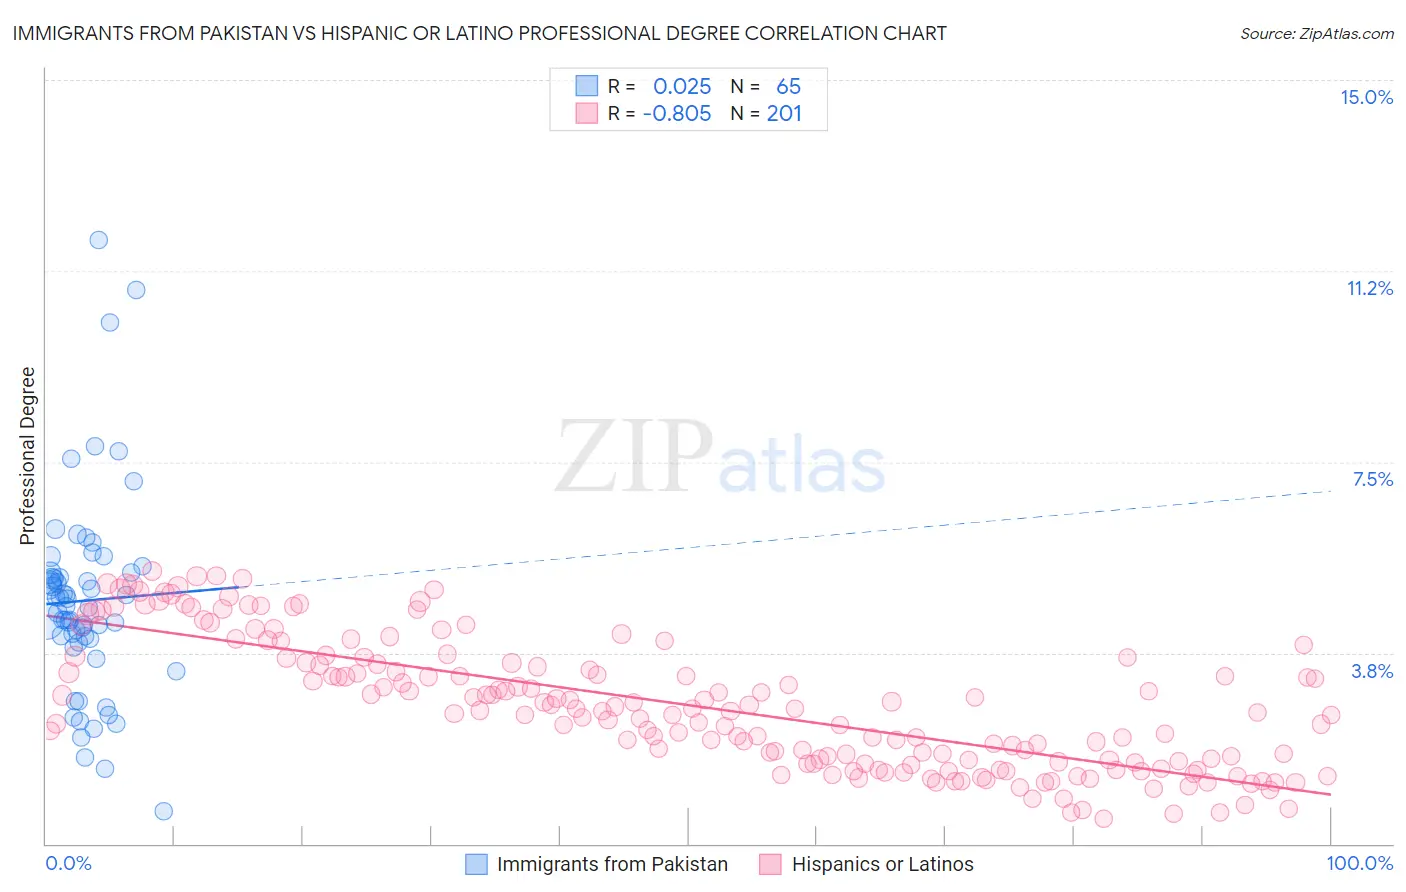 Immigrants from Pakistan vs Hispanic or Latino Professional Degree